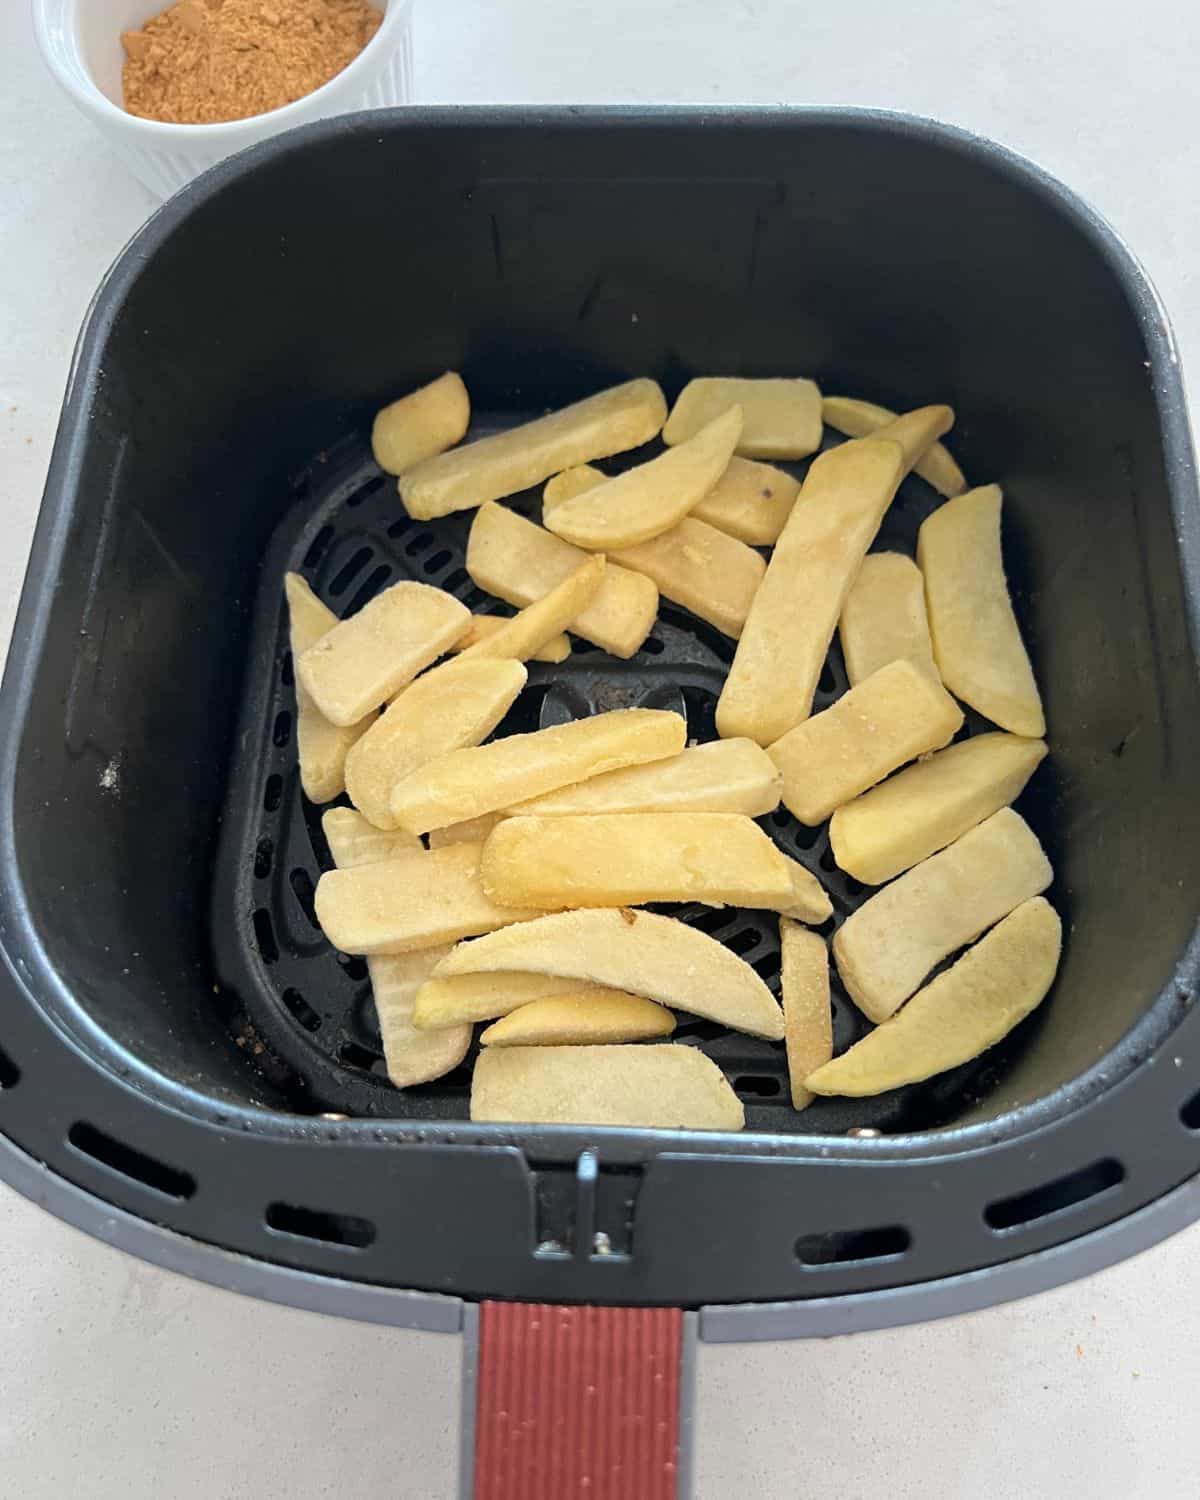 Frozen french fries in air fryer basket. 